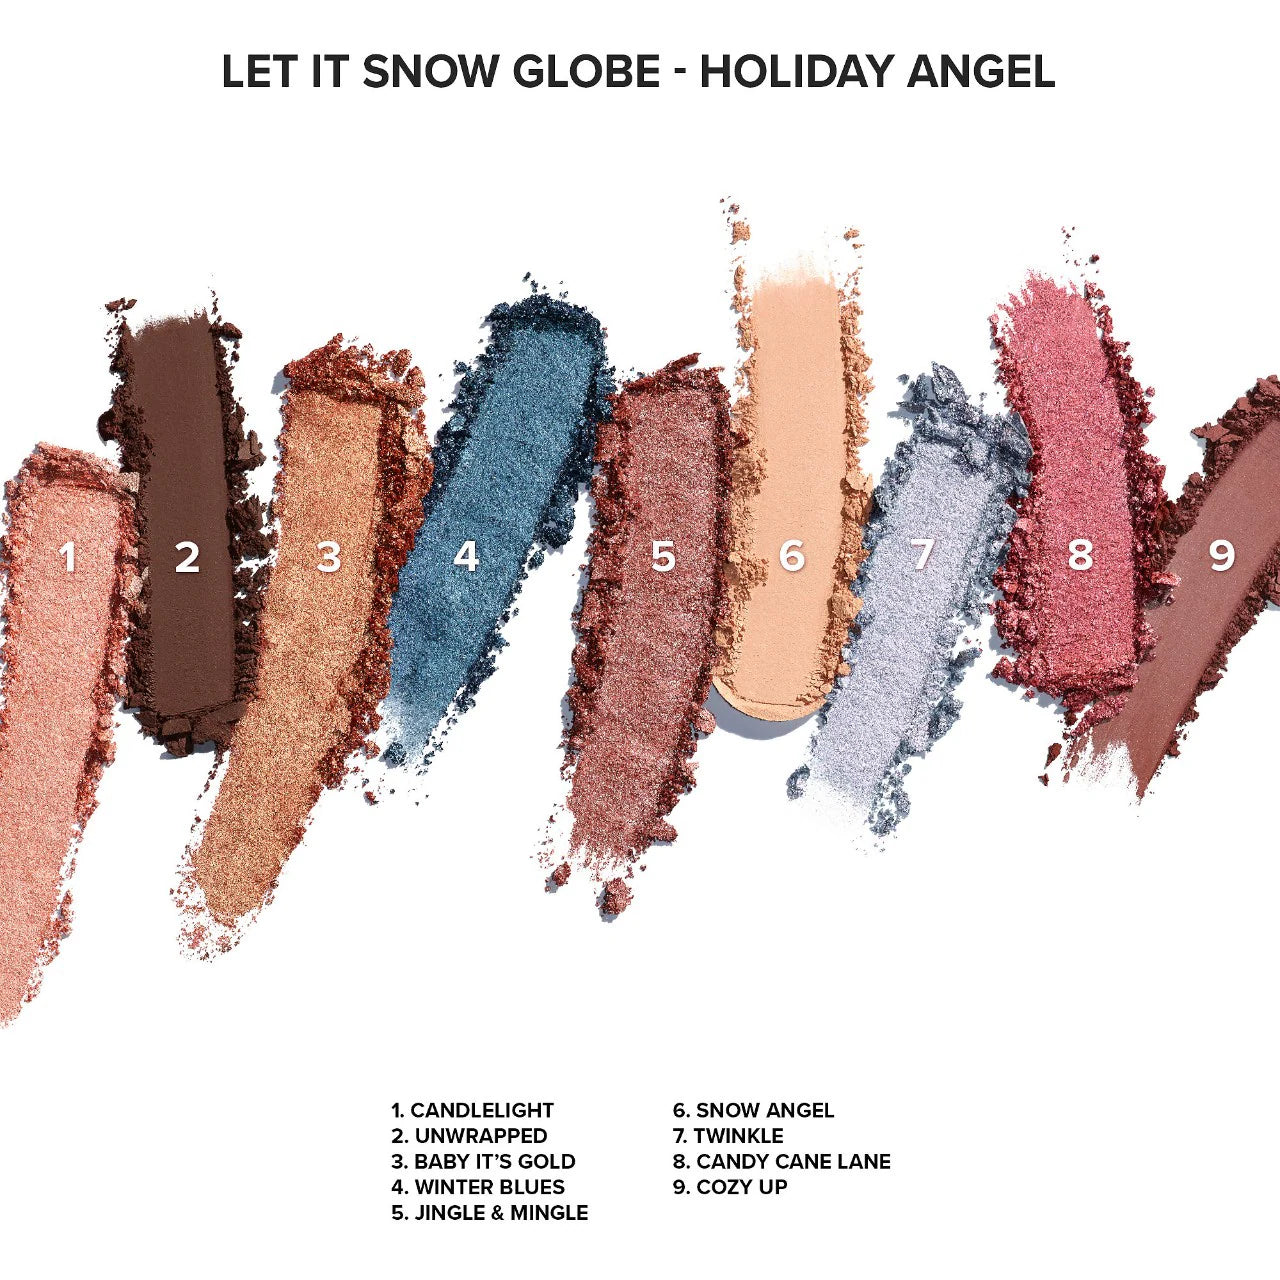 Let it Snow Globes Makeup Collection